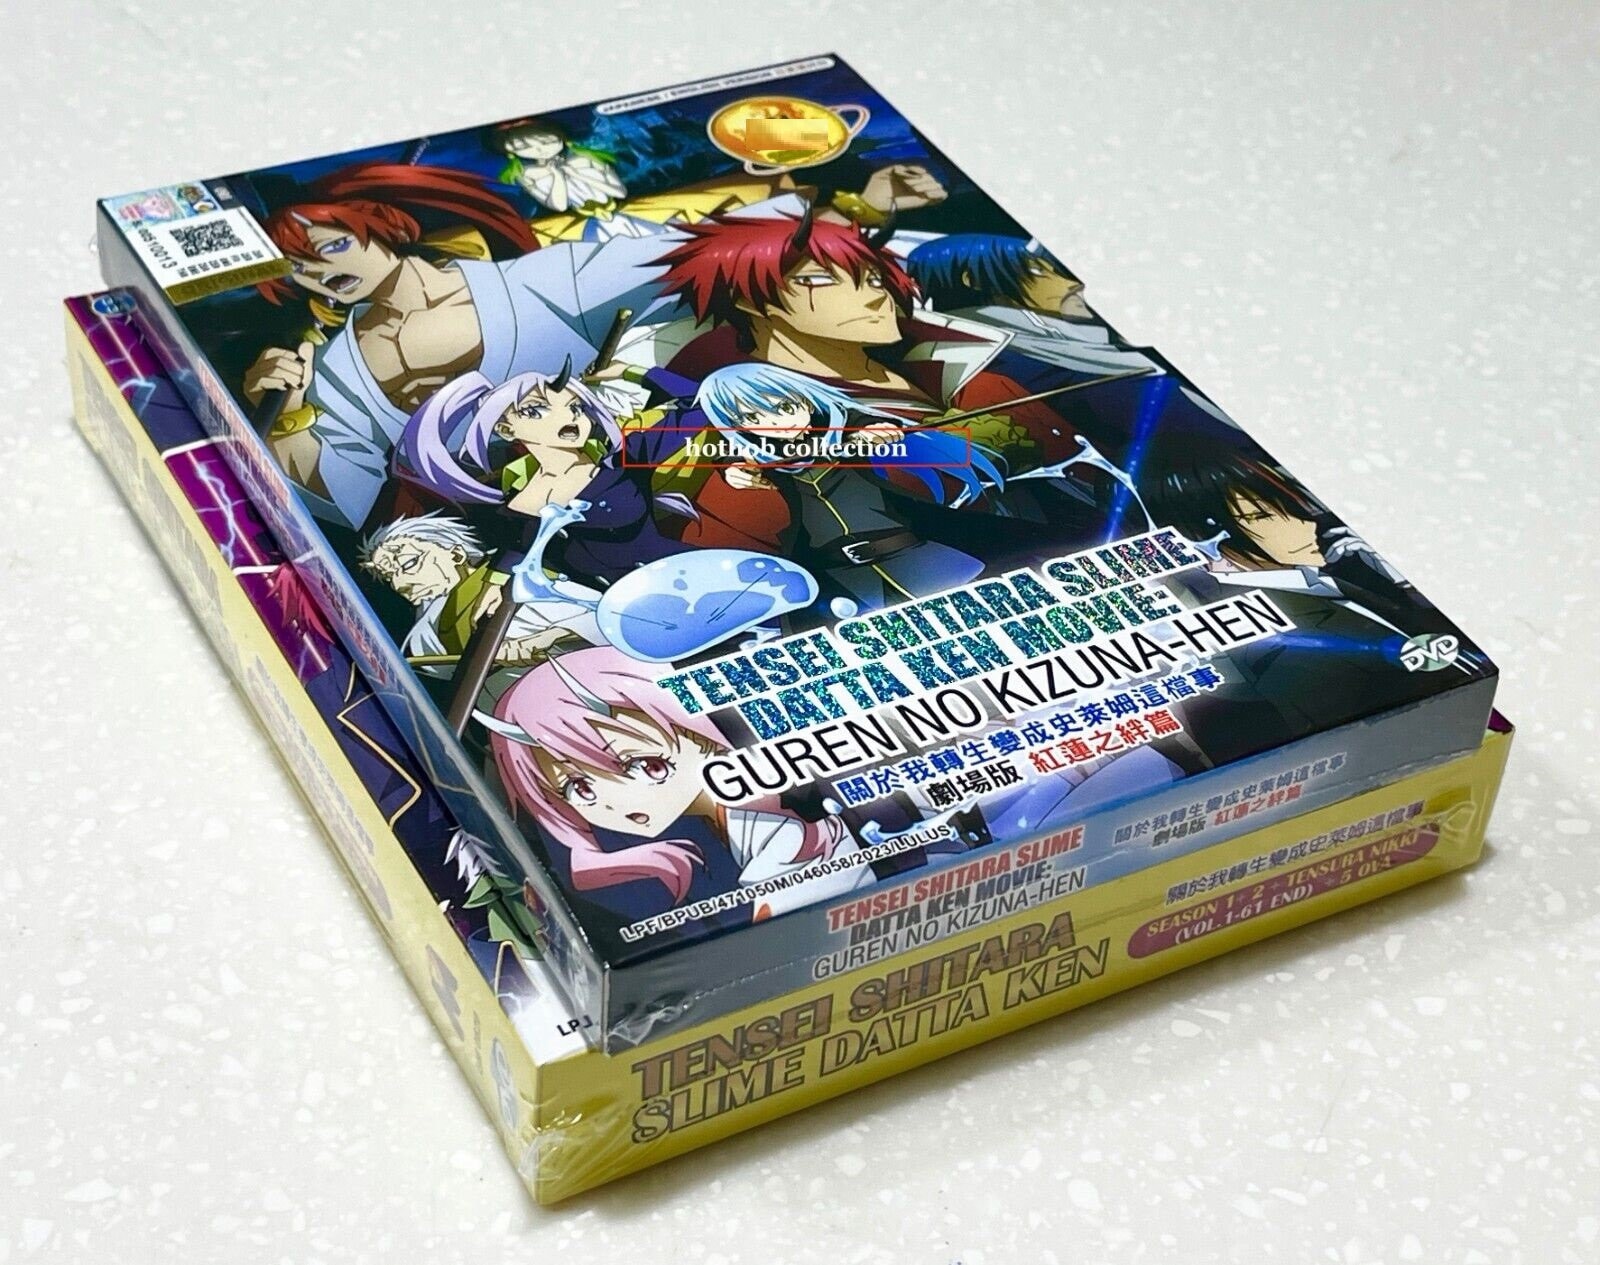 Anime DVD Tensei Shitara Slime Datta Ken Vol. 1-25 End English Version  Region 0 for sale online